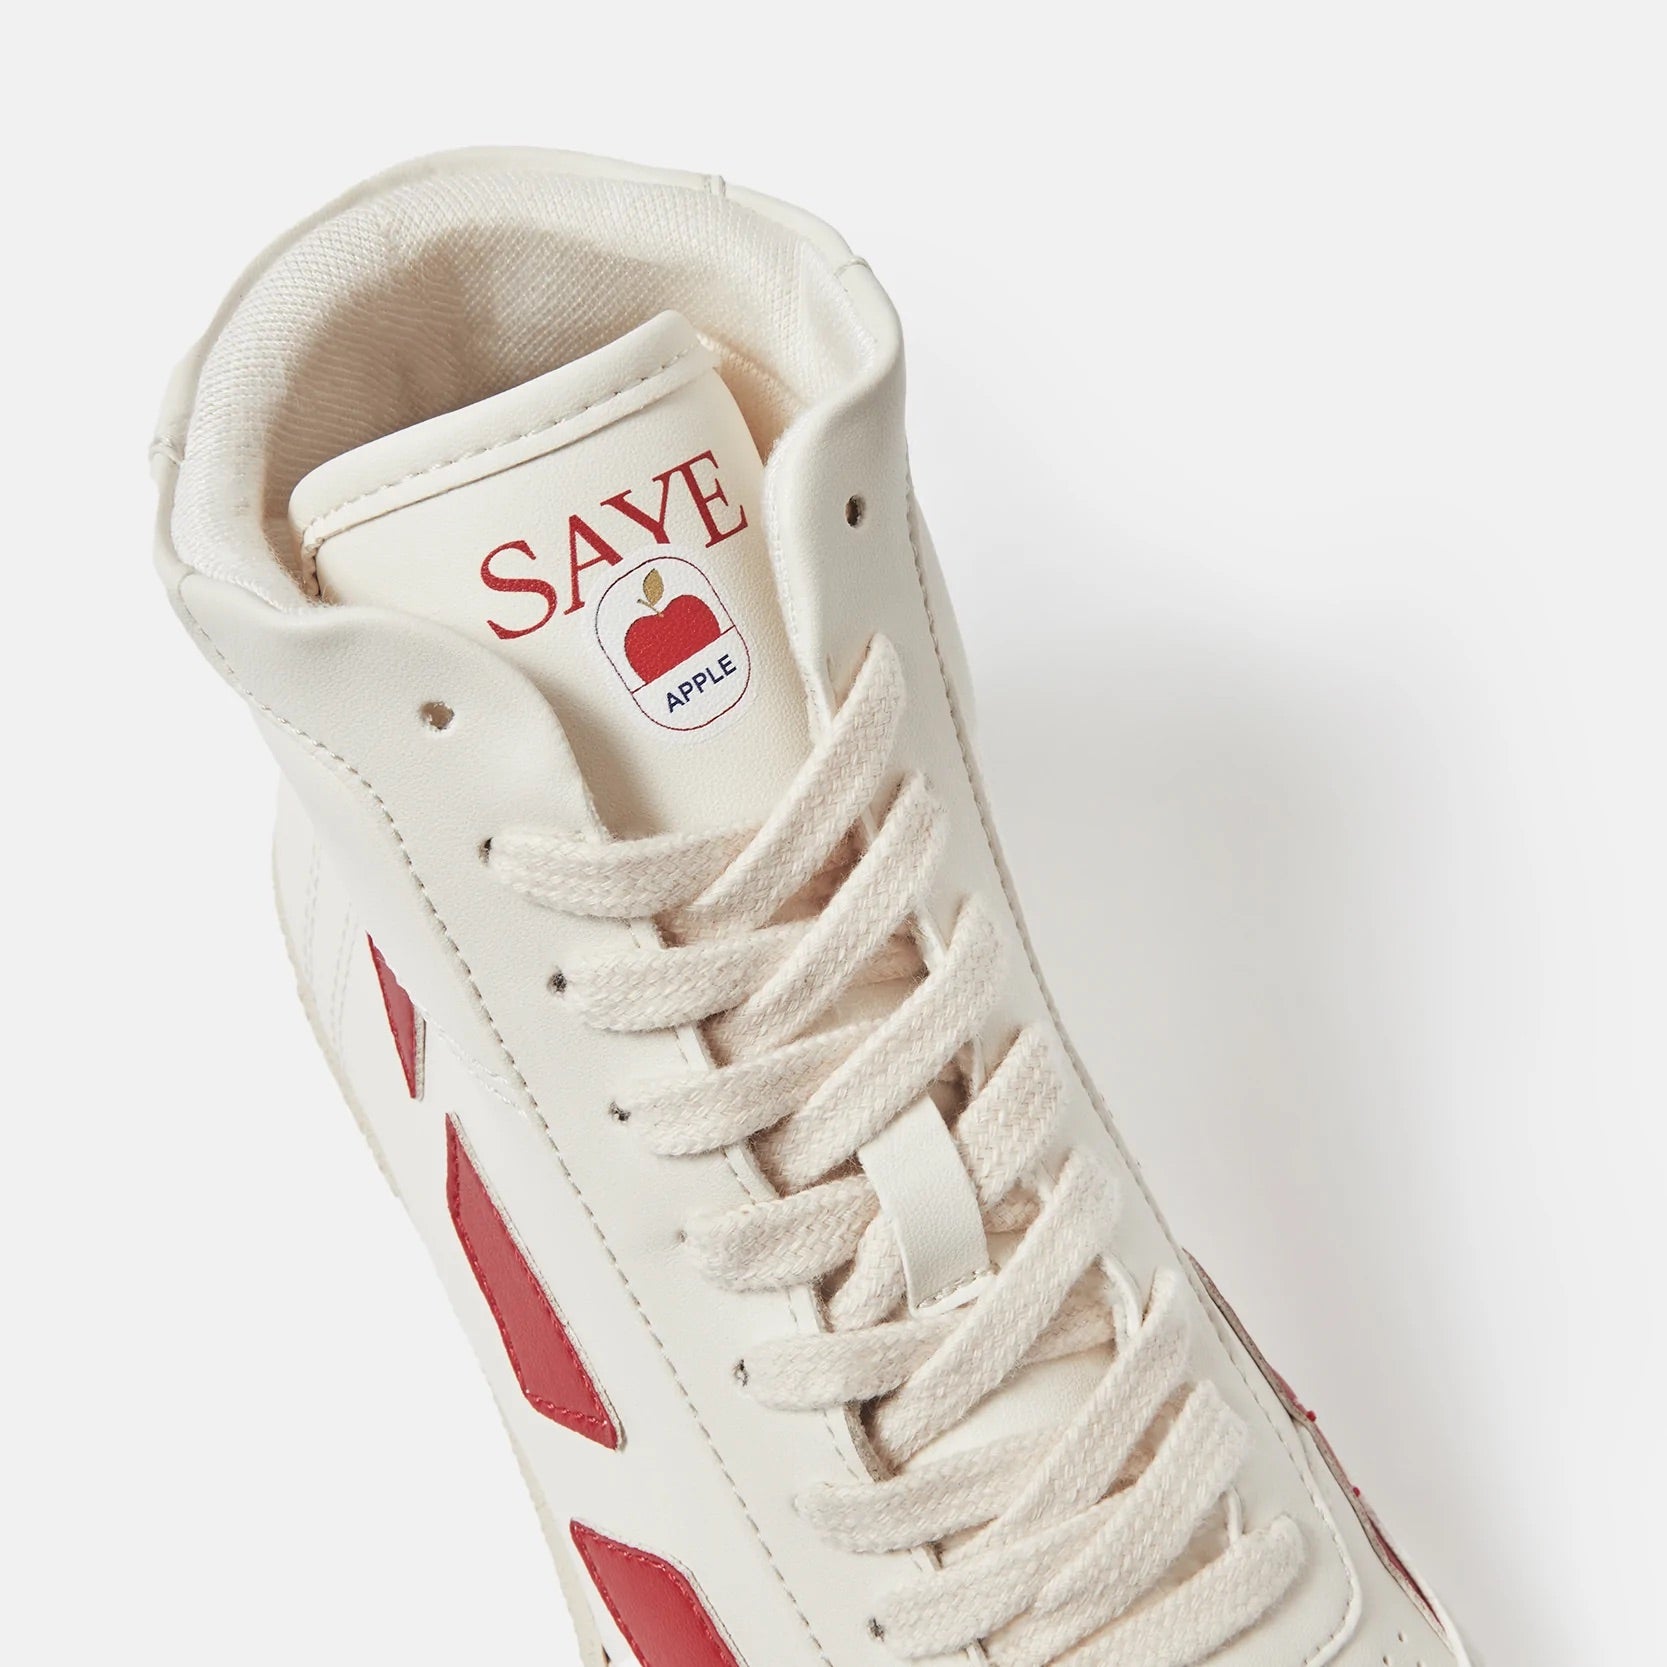 A SAYE Modelo '89 Hi Sneaker with the word santa on it.